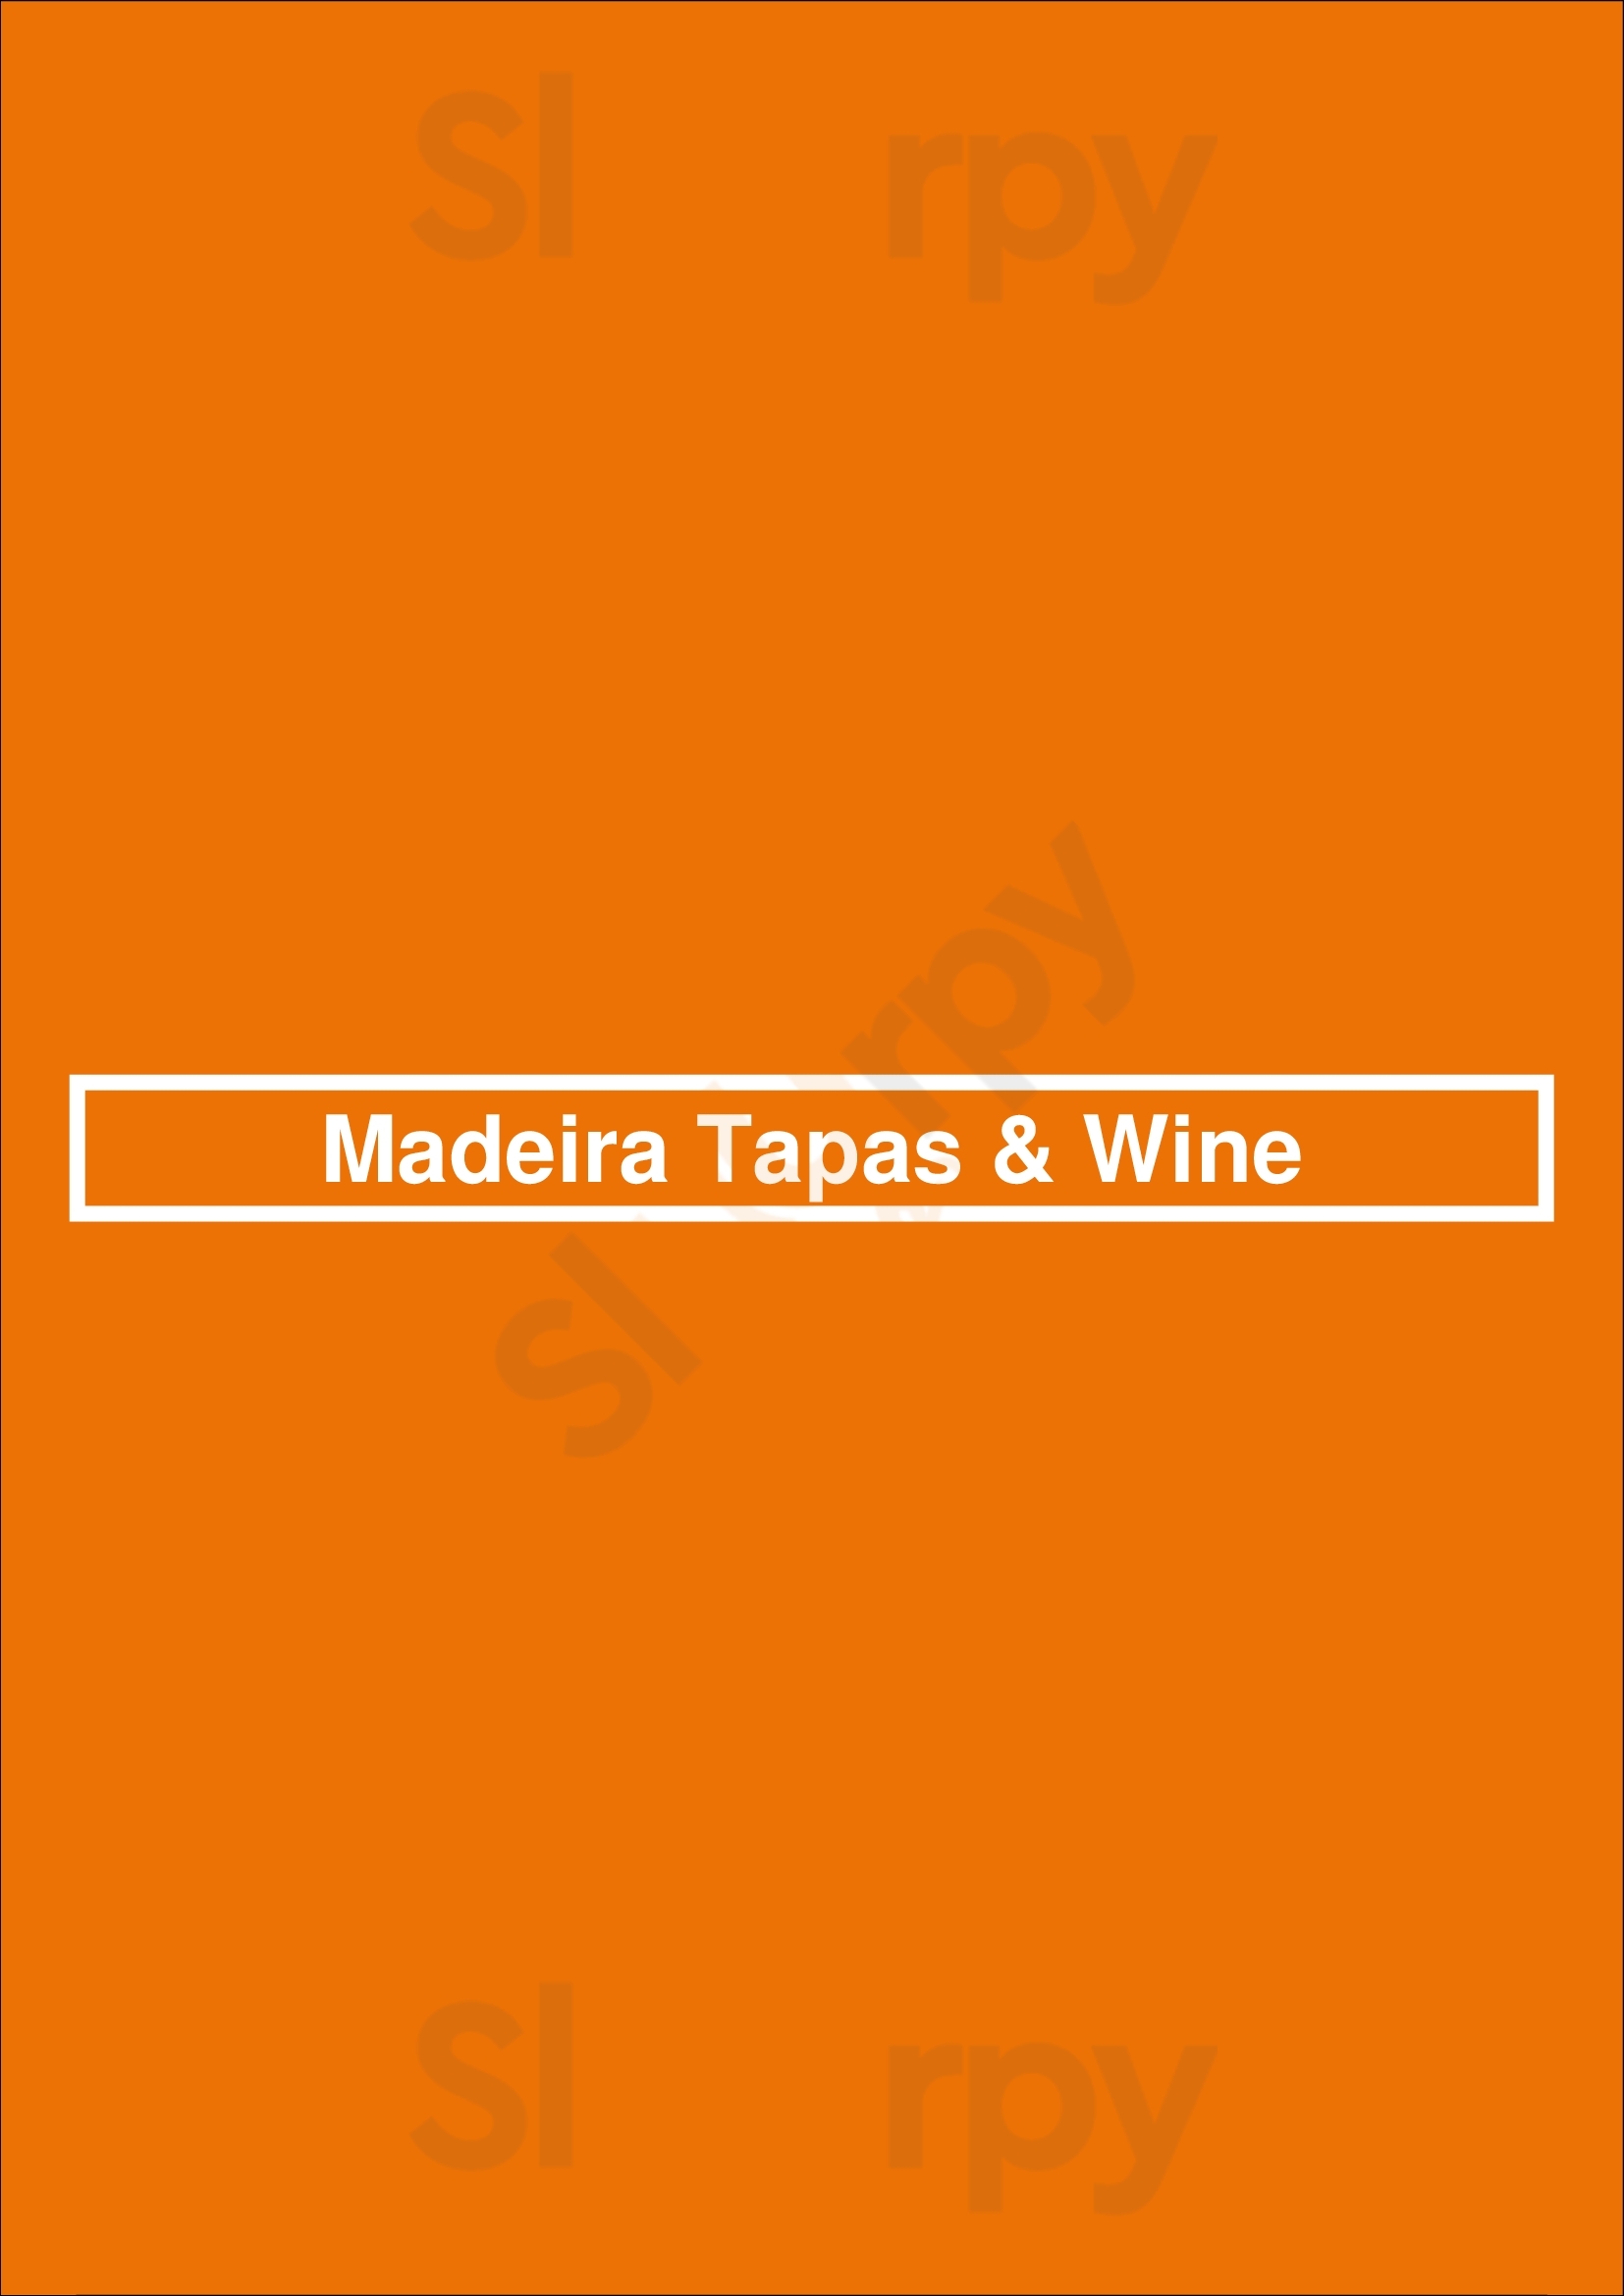 Madeira Tapas & Wine Funchal Menu - 1